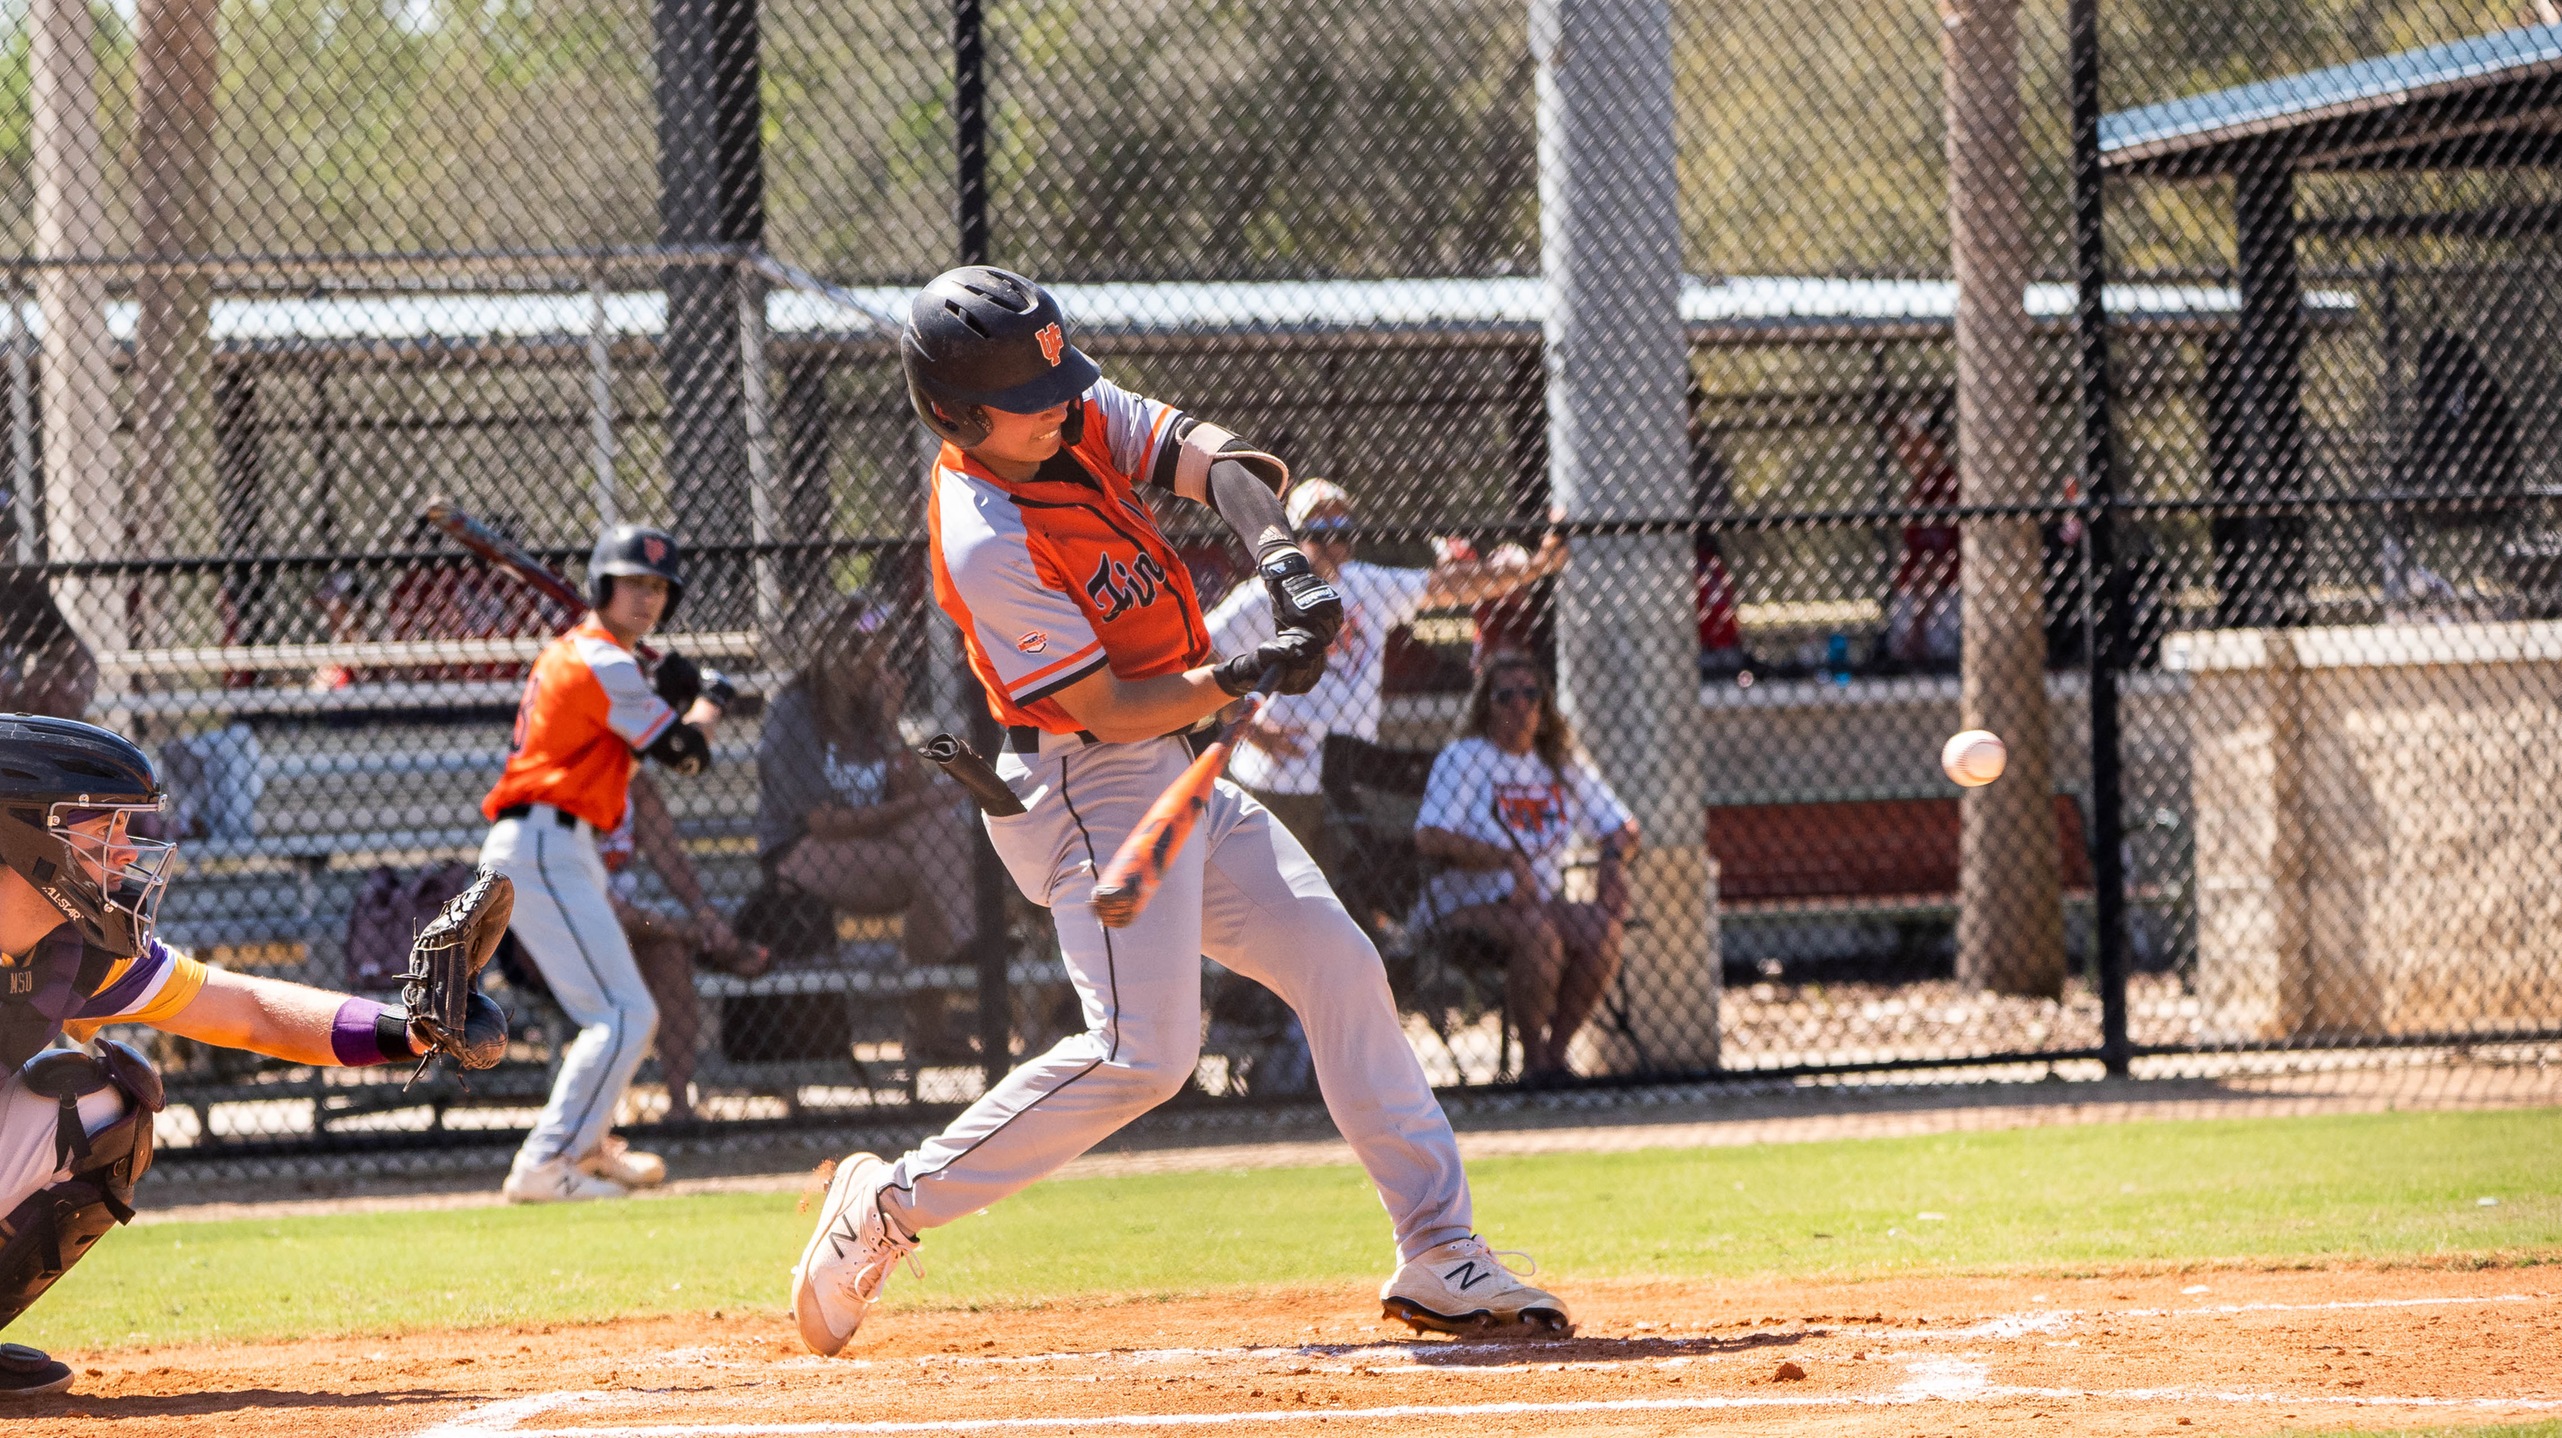 player in orange hitting ball 